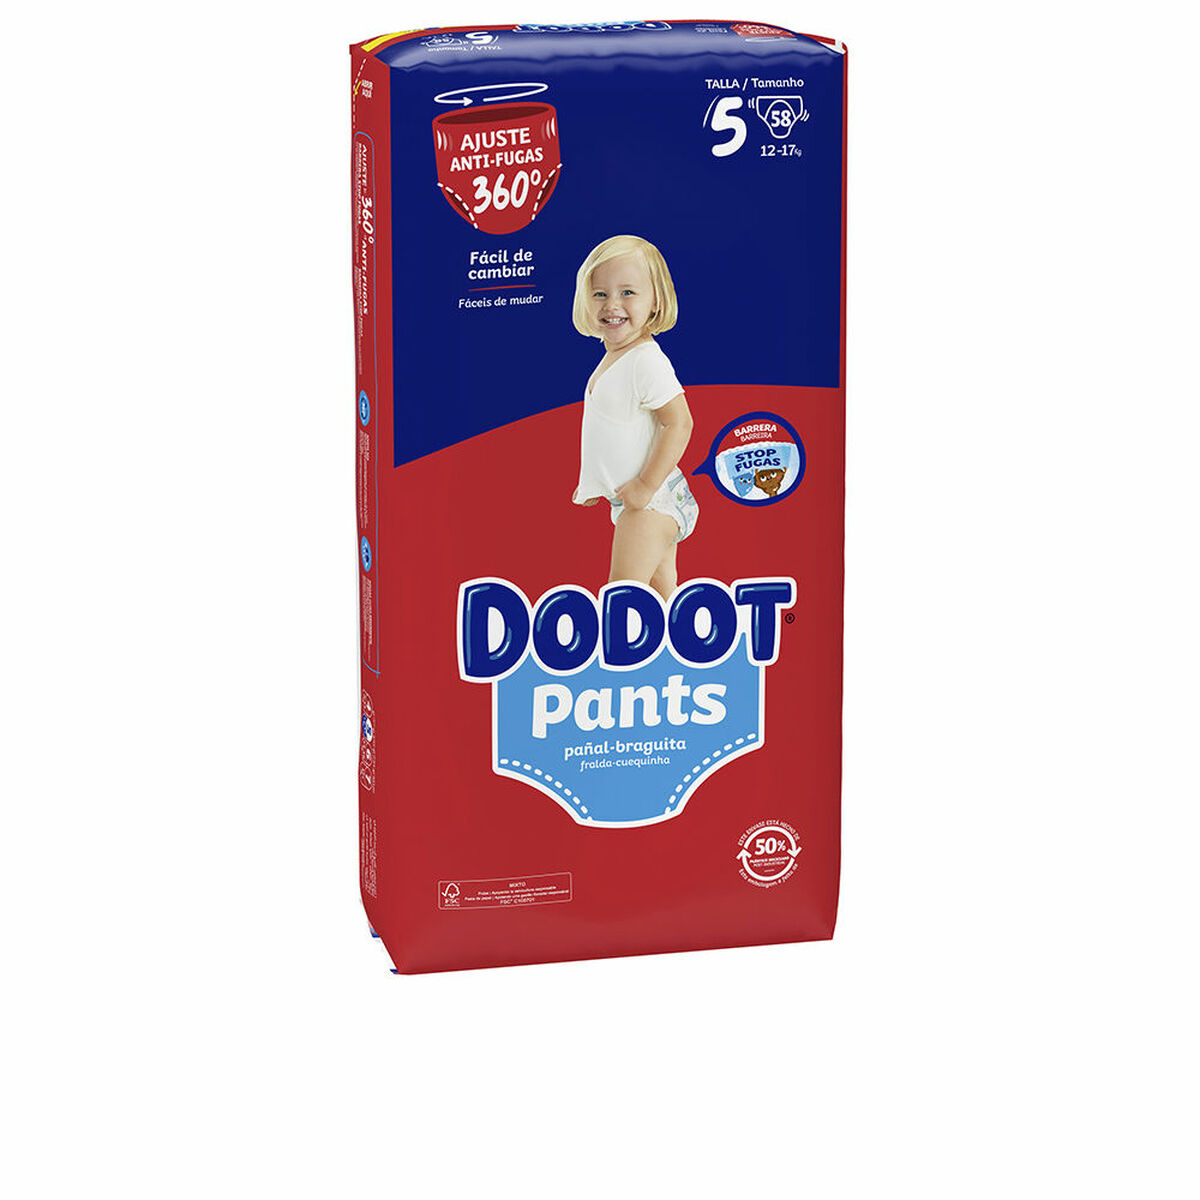 PAÑALES-BRAGUITA Dodot® Pants